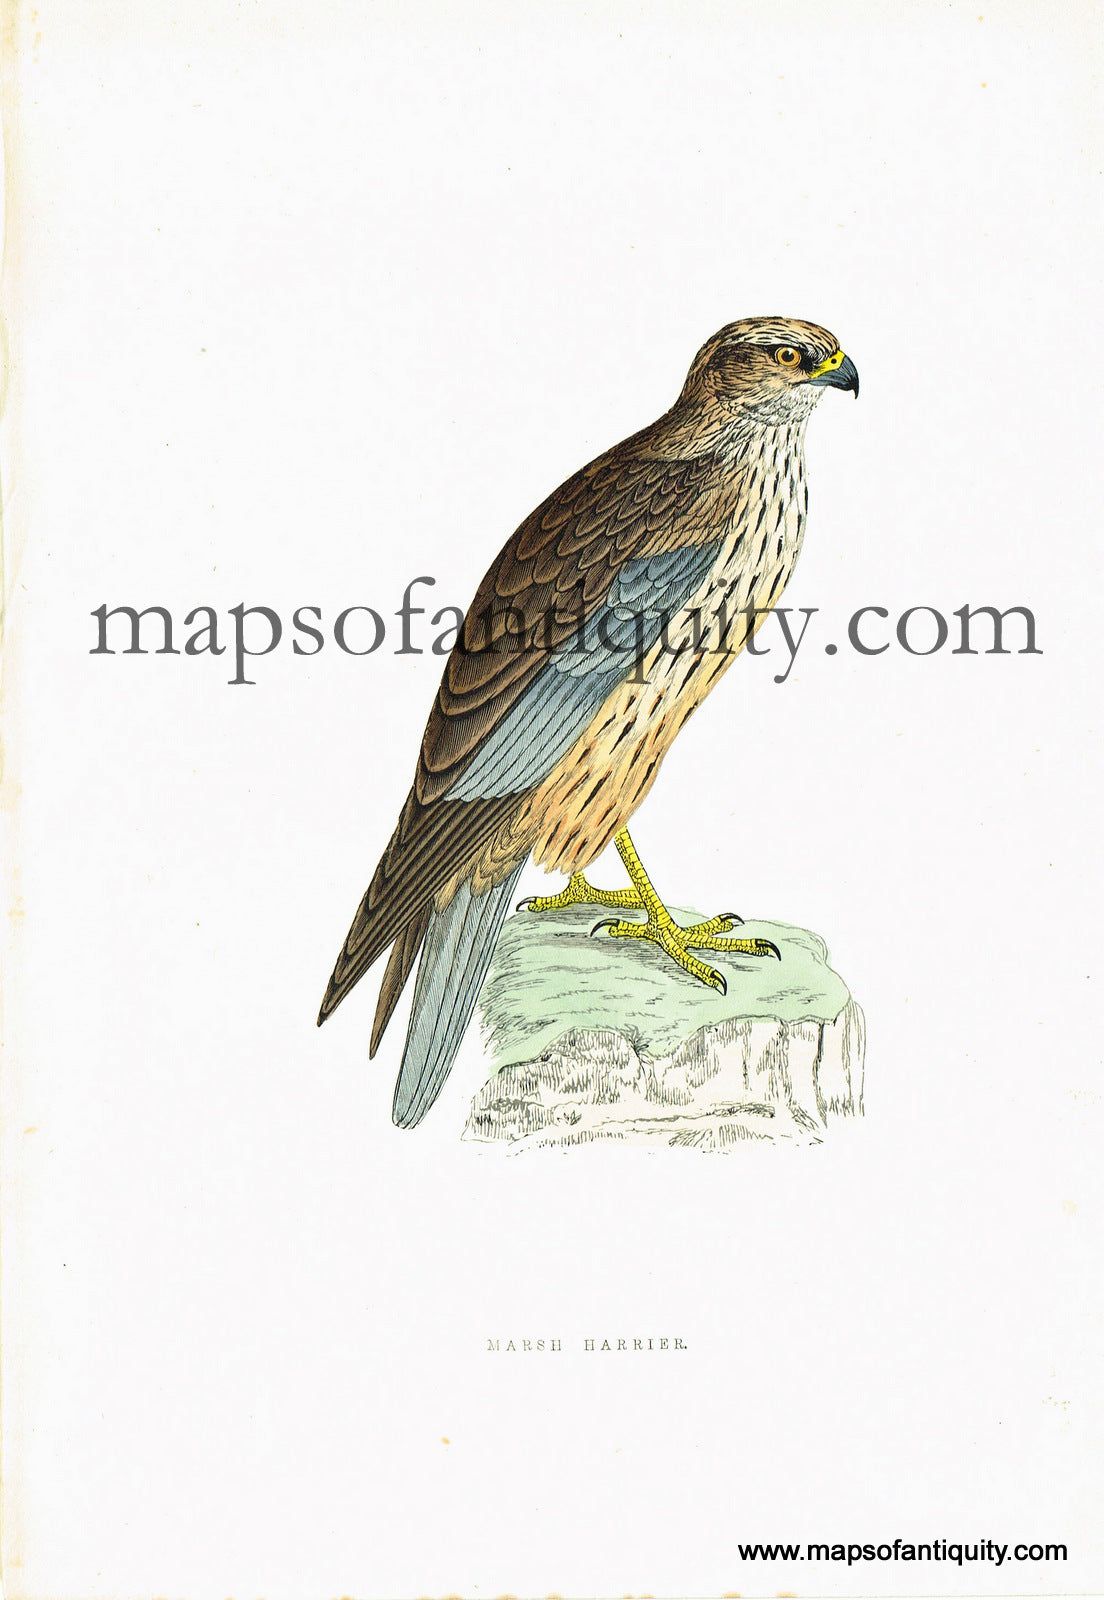 Antique-Hand-Colored-Engraved-Illustration-Marsh-Harrier-Antique-Prints-Natural-History-Birds-c.-1880-Morris-Maps-Of-Antiquity